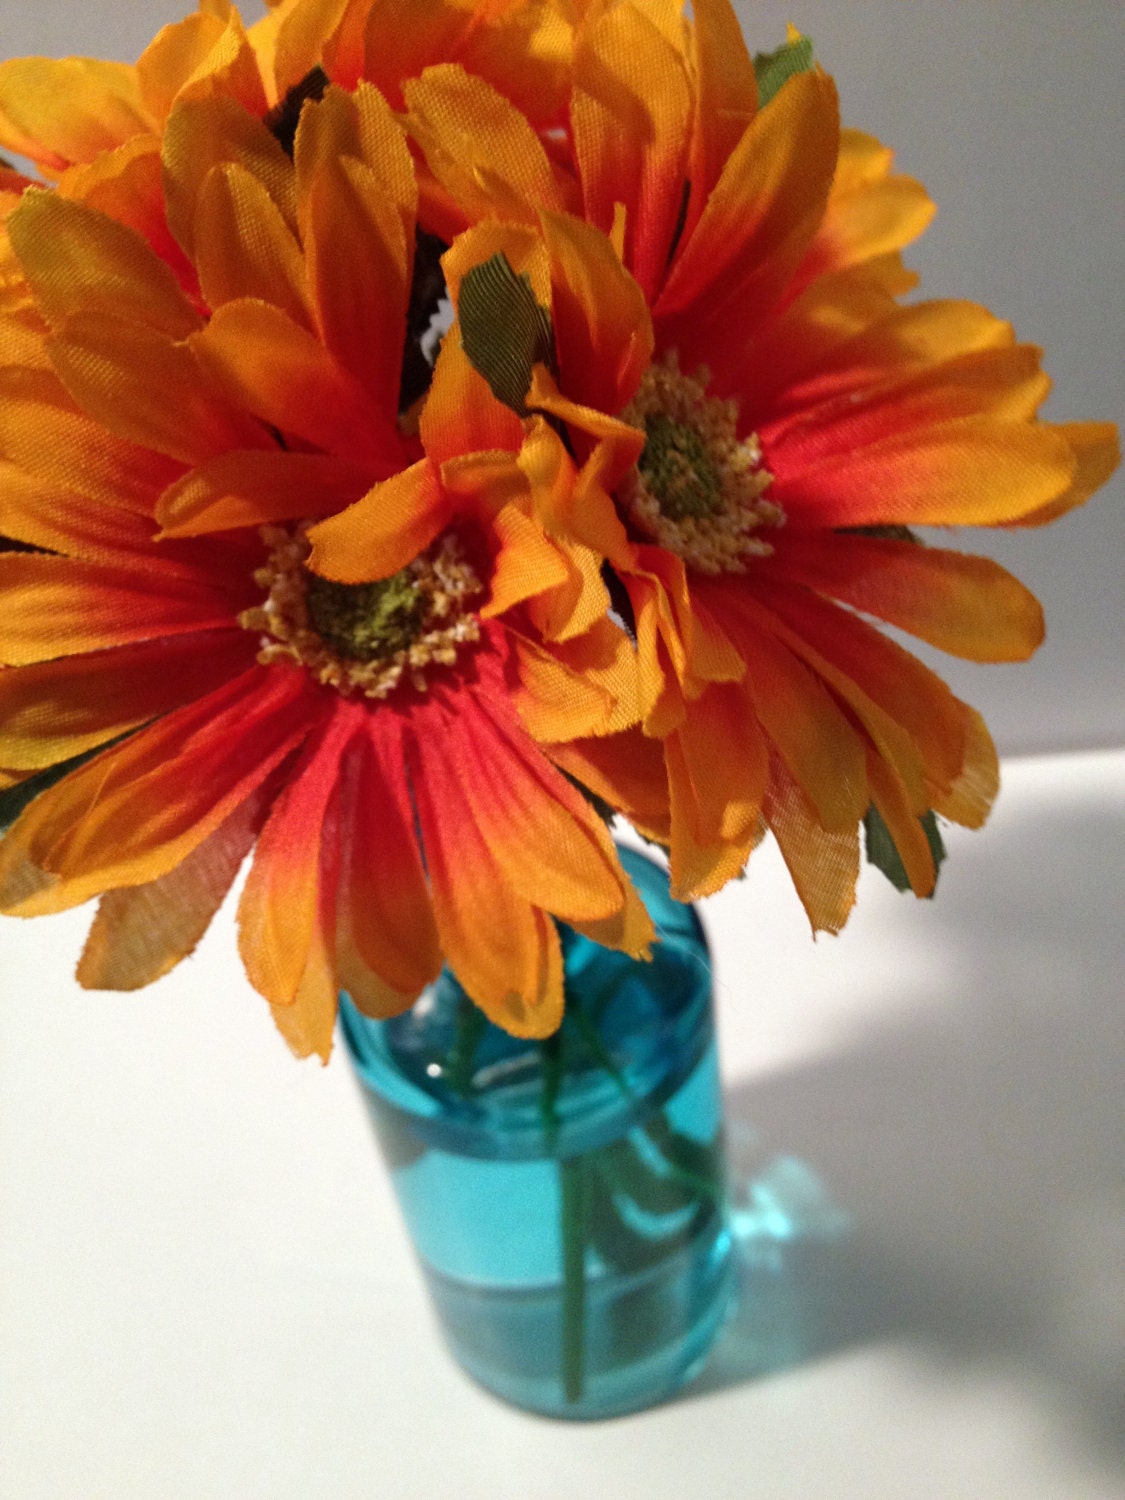 Blue Glass Vase with Orange Flowers